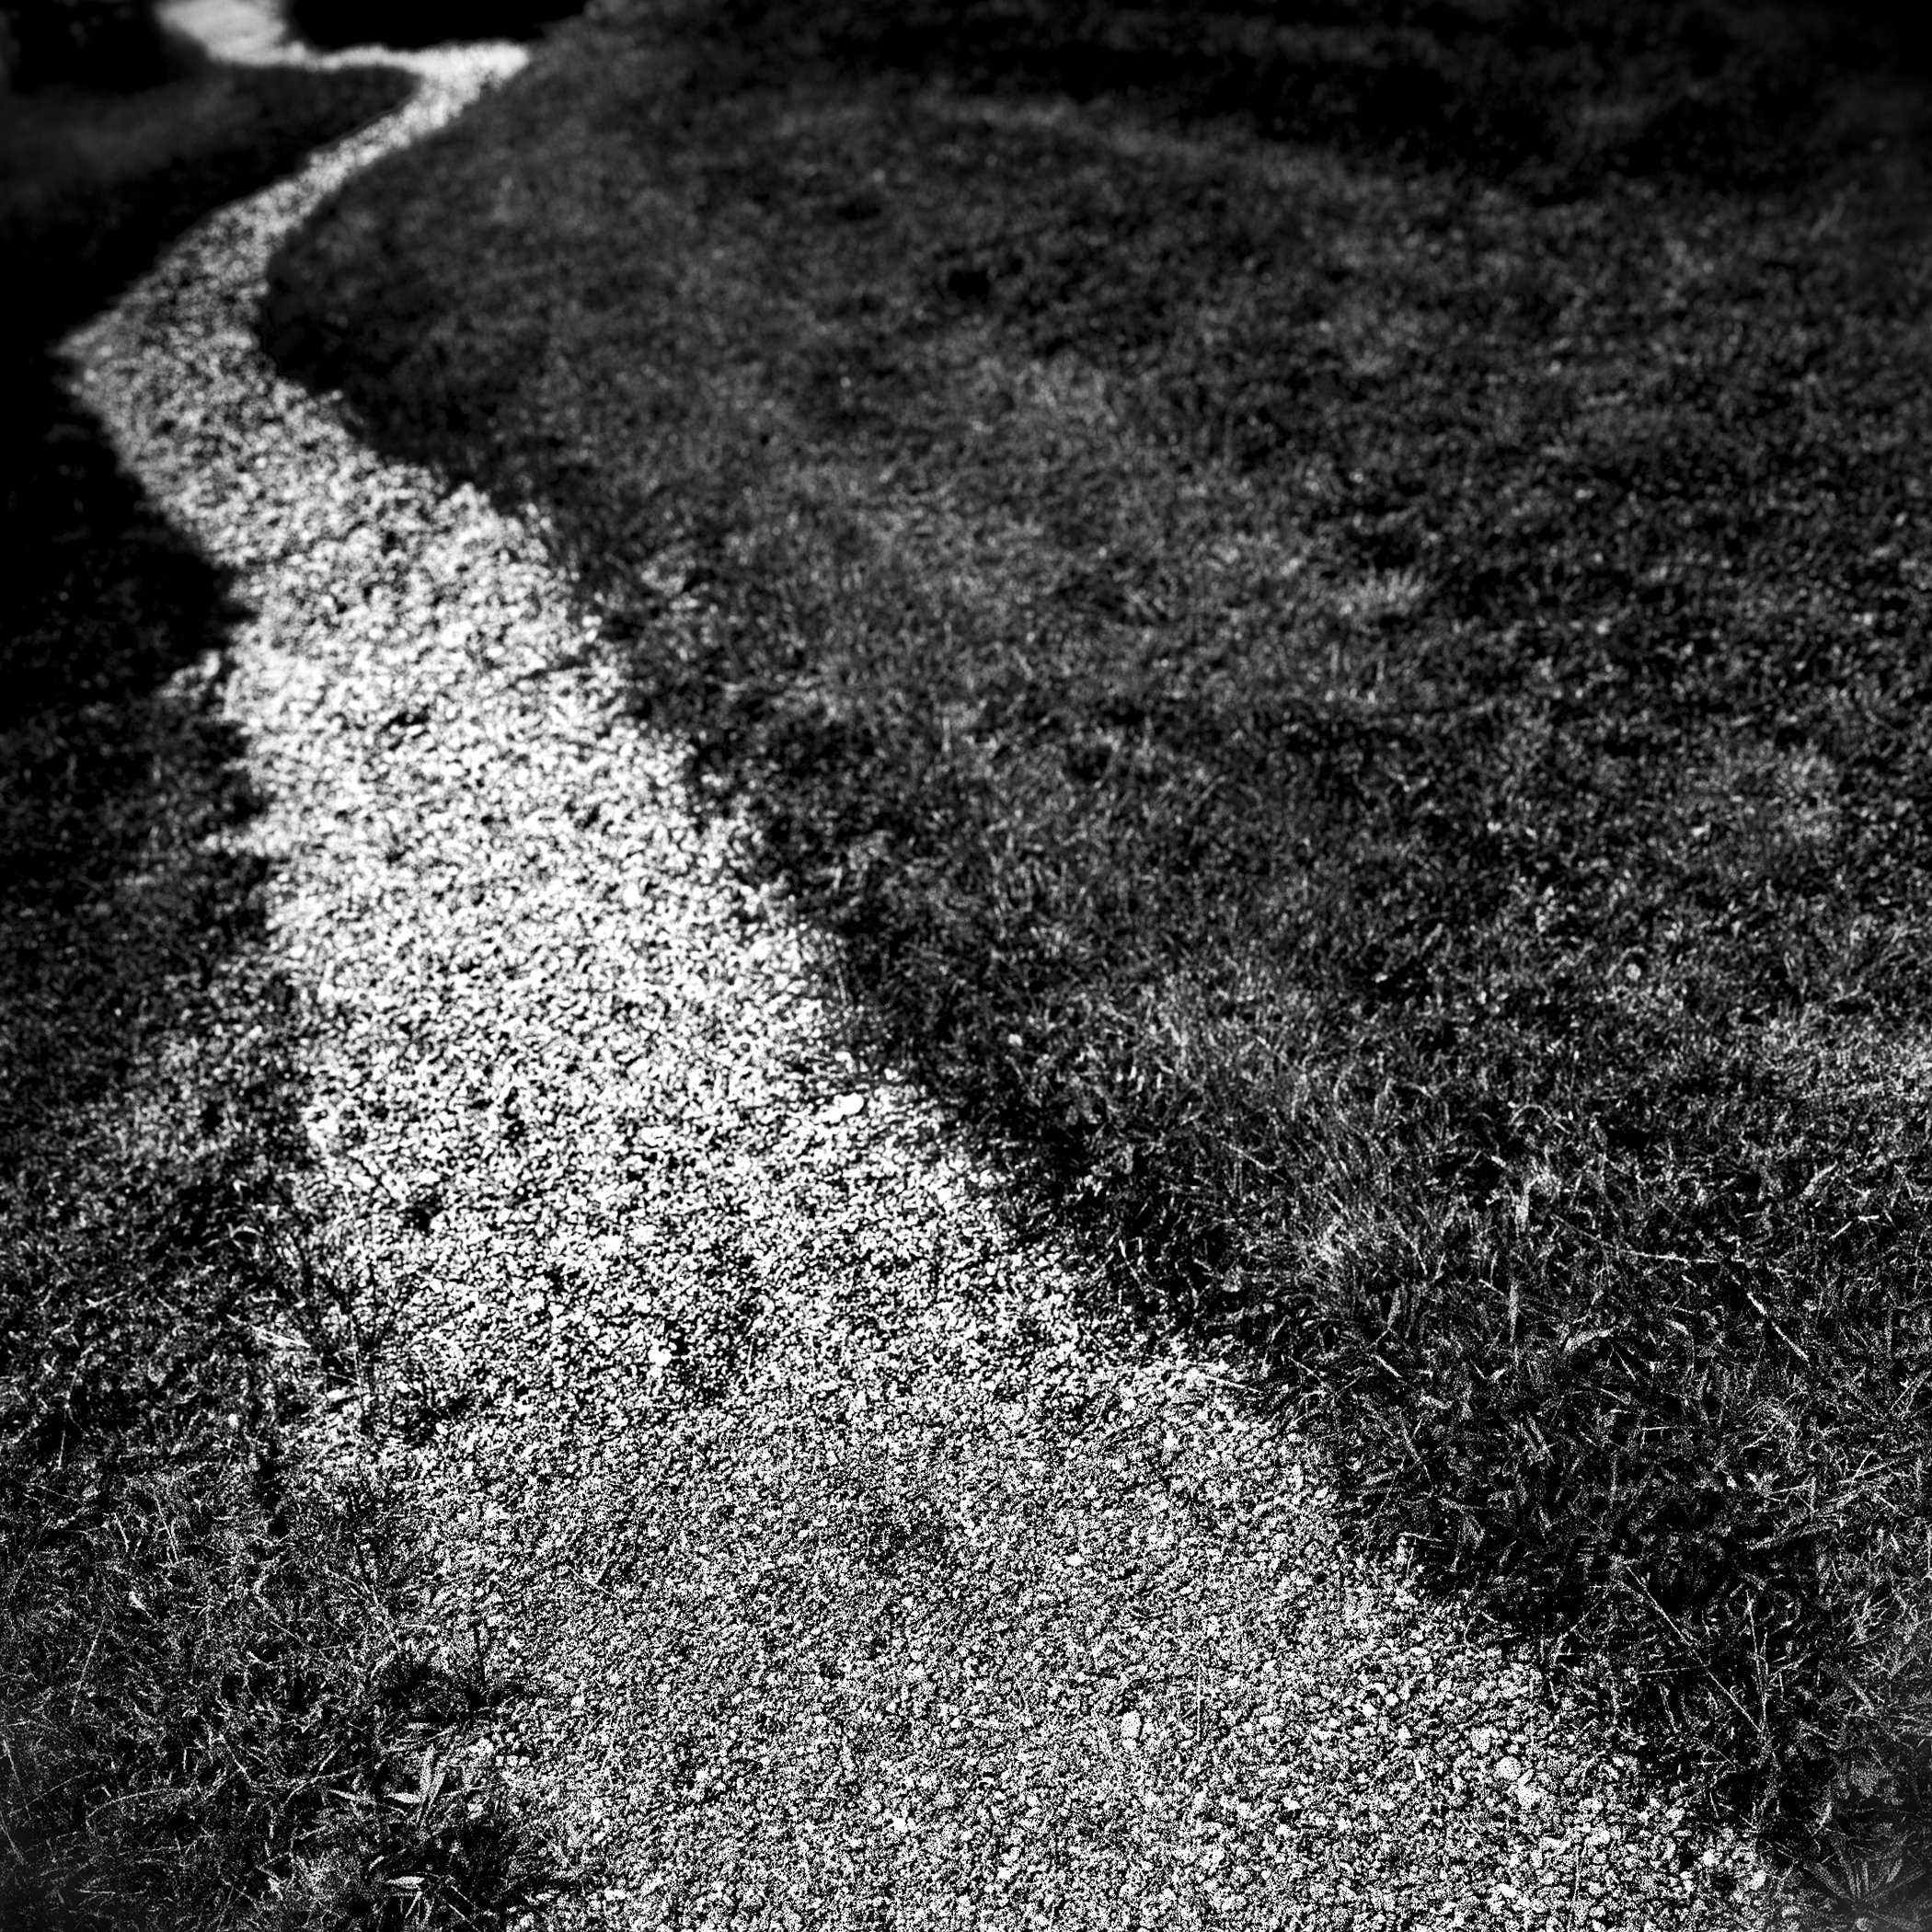    Gravel Path   by Patrick J. Cicalo 